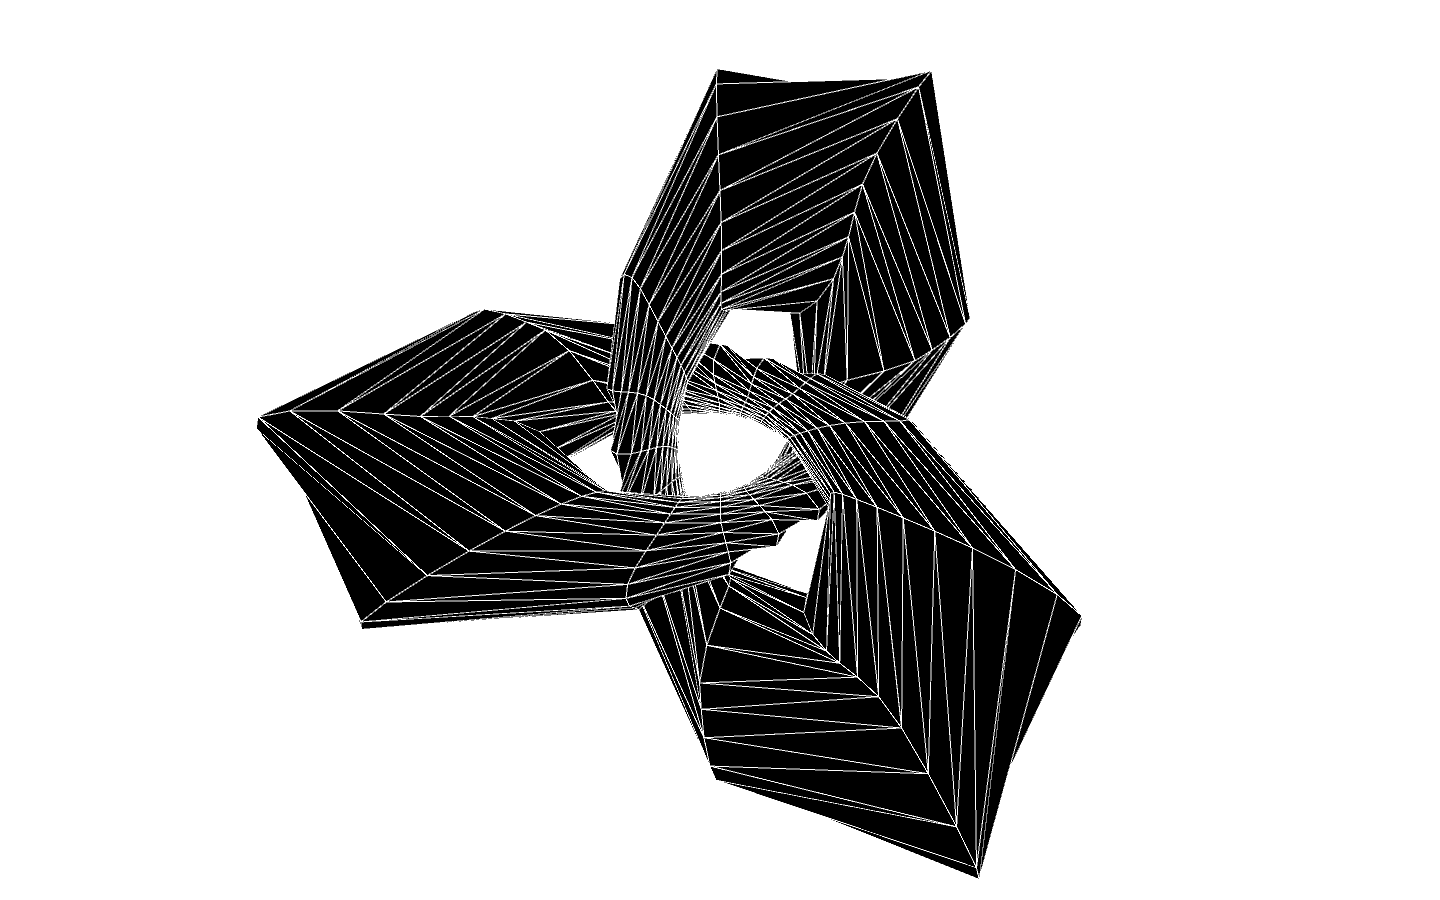 Lagrangian trefoil torus